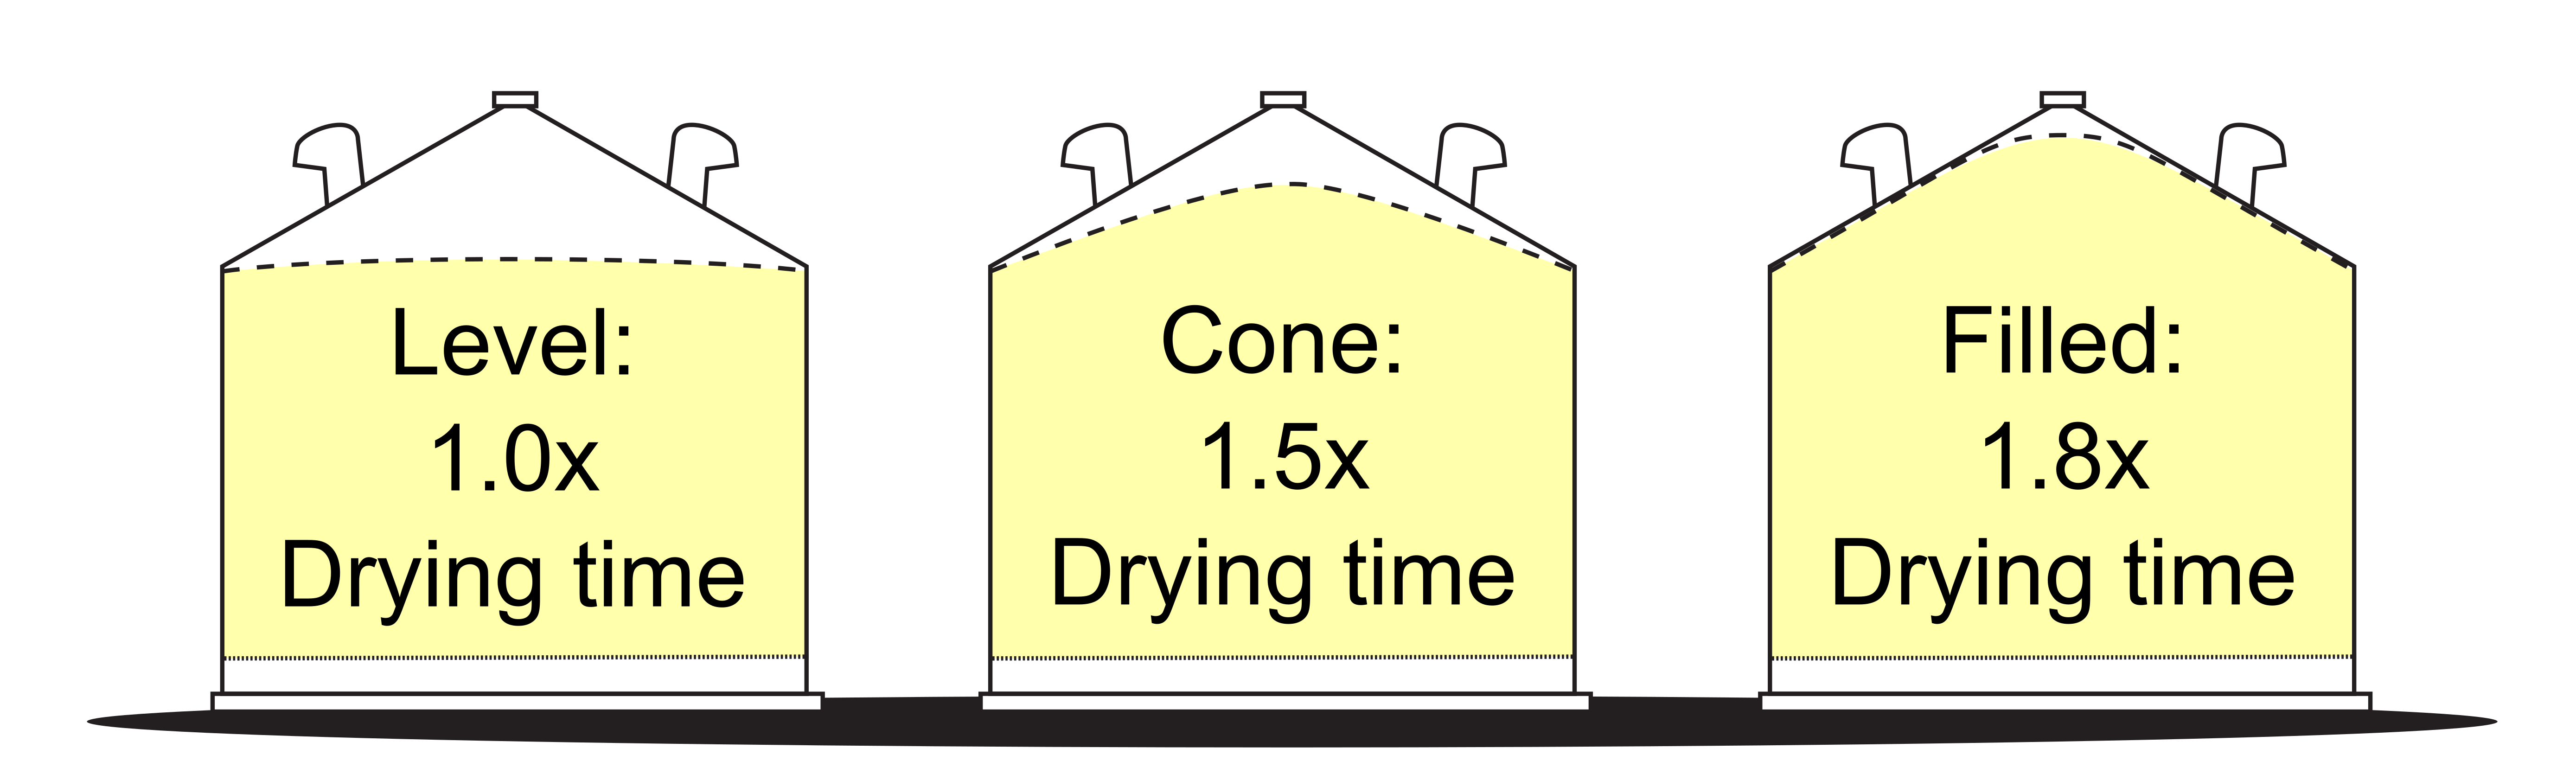 Figure 1: Uneven grain dries much more slowly than level grain (based on 36 ft. diameter bin with 12 ft. grain depth, and average airflow of 2 CFM per bushel)